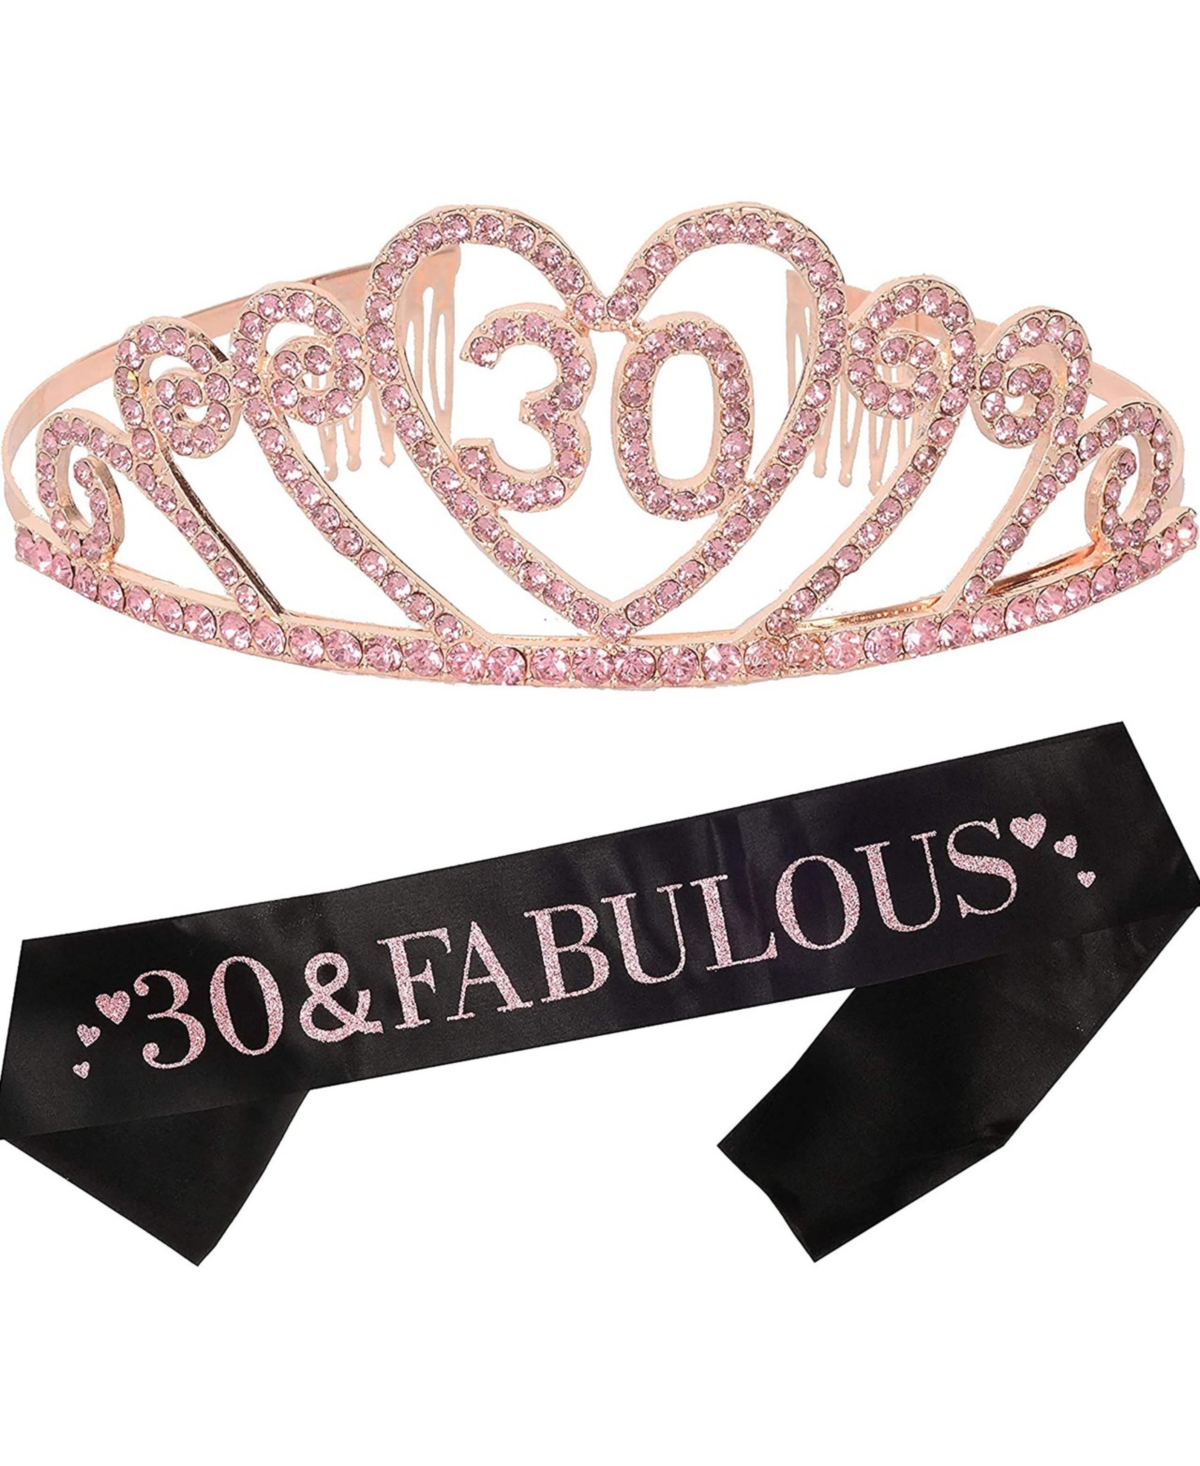 30th Birthday Sash and Tiara for Women - Fabulous Glitter Sash + Gravity Rhinestone Pink Premium Metal Tiara for Her, 30th Birthday Gifts f